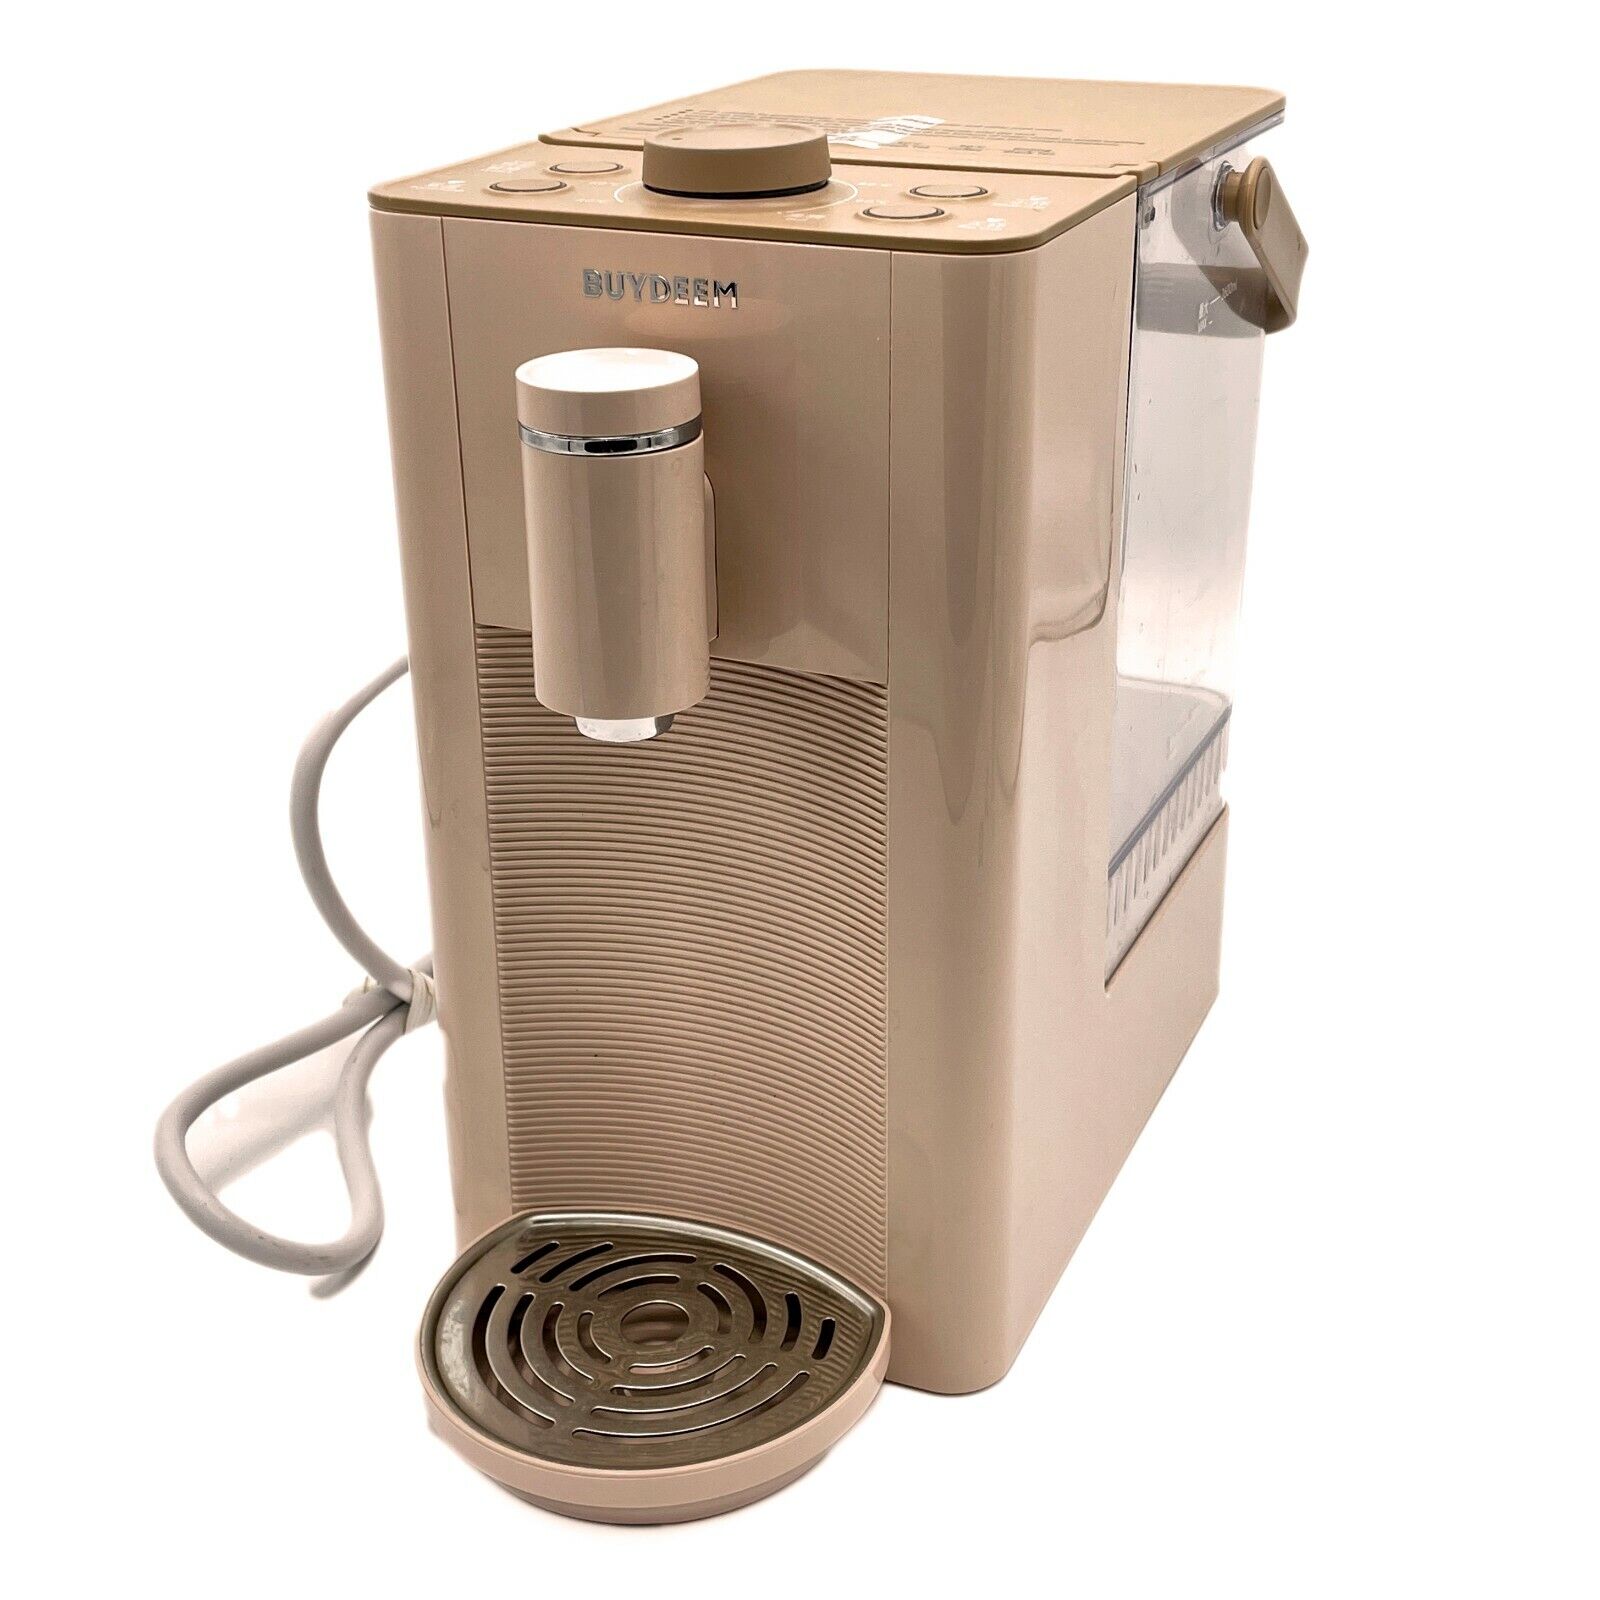 Buydeem S7133 Hot Water Boiler and Warmer Fresh, Instant, Adjustable Temperature Świetne oferty i okazje